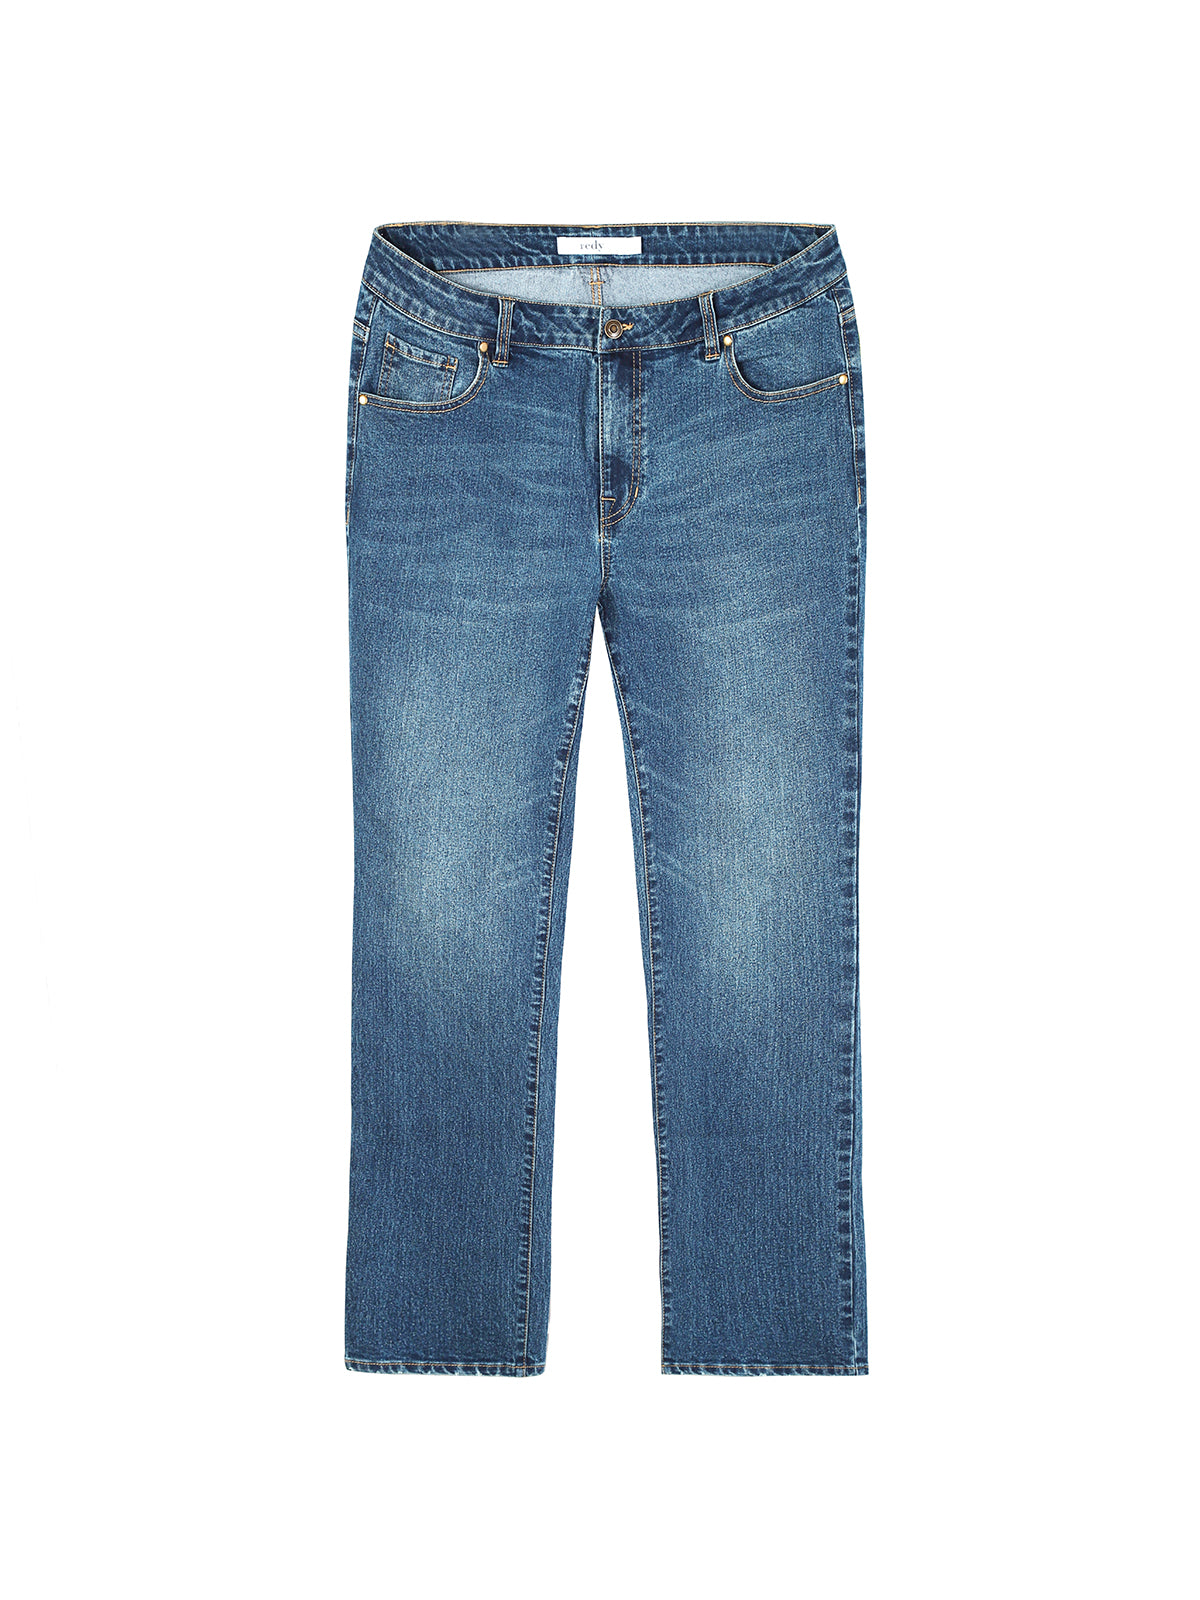 Kuul Blue Jeans Pants Eleven 11 Womens Denim Stretch 25 Waist X